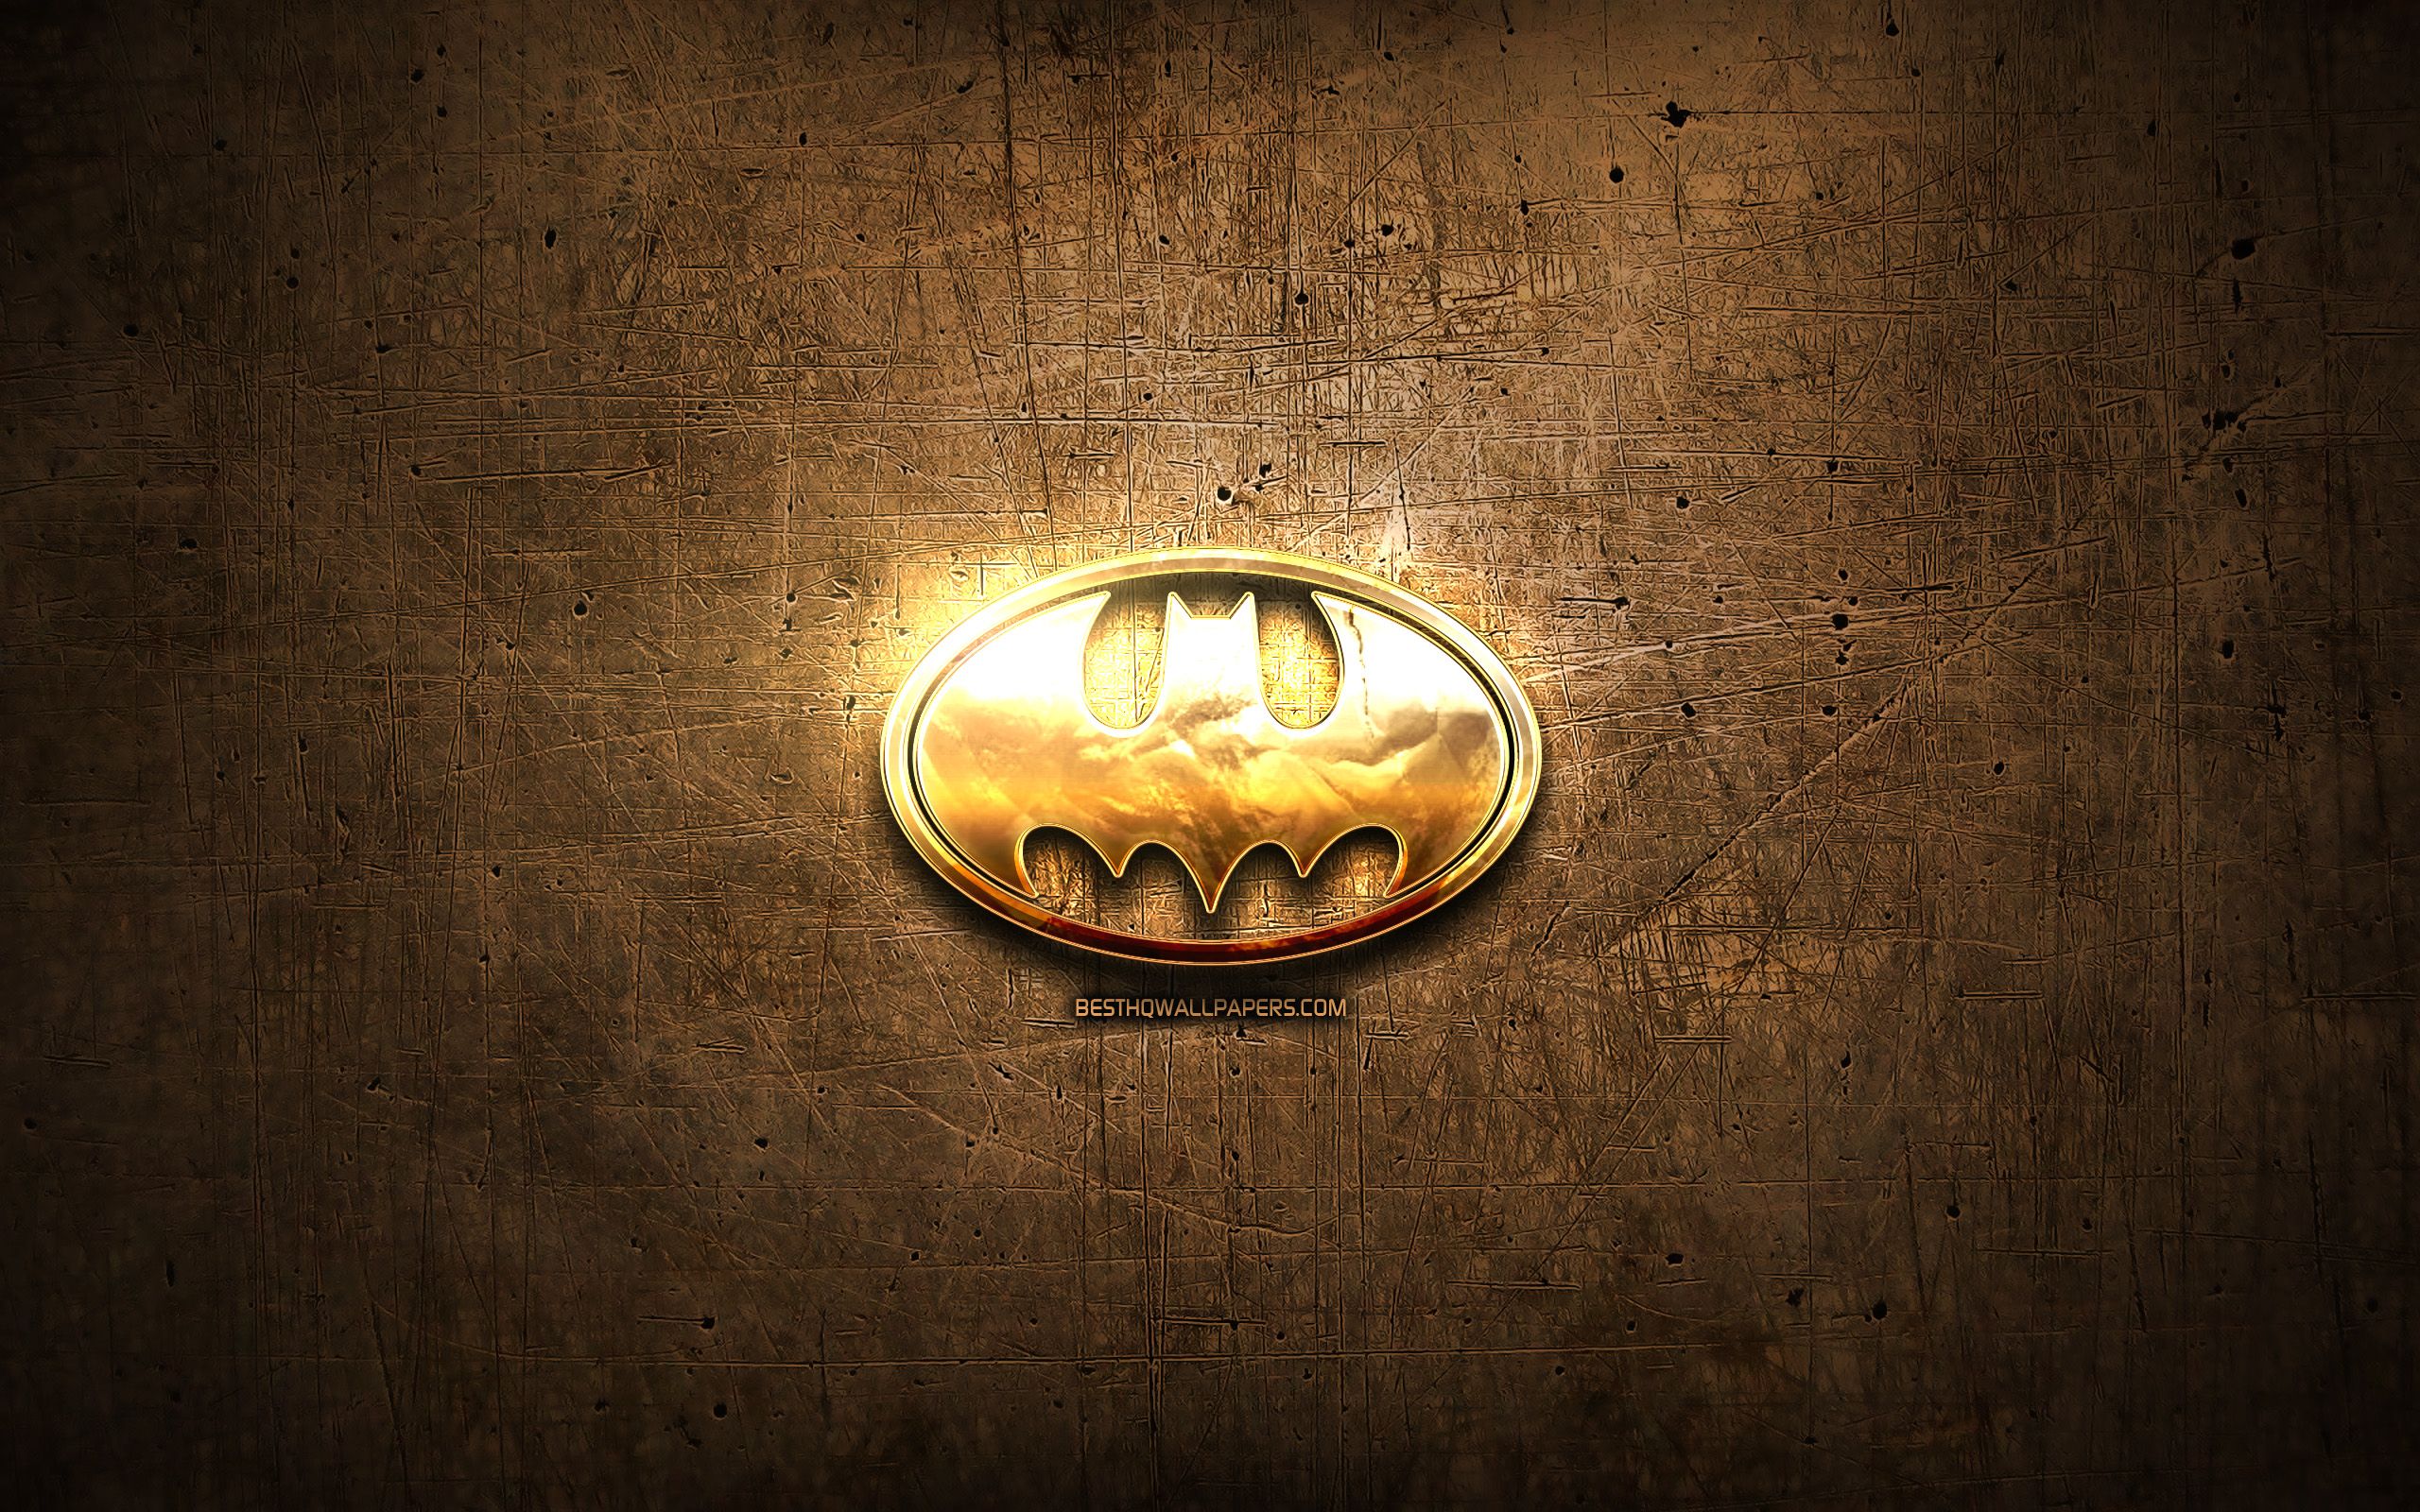 Download wallpaper Batman golden logo, artwork, brown metal background, creative, Batman logo, superheroes, Batman for desktop with resolution 2560x1600. High Quality HD picture wallpaper